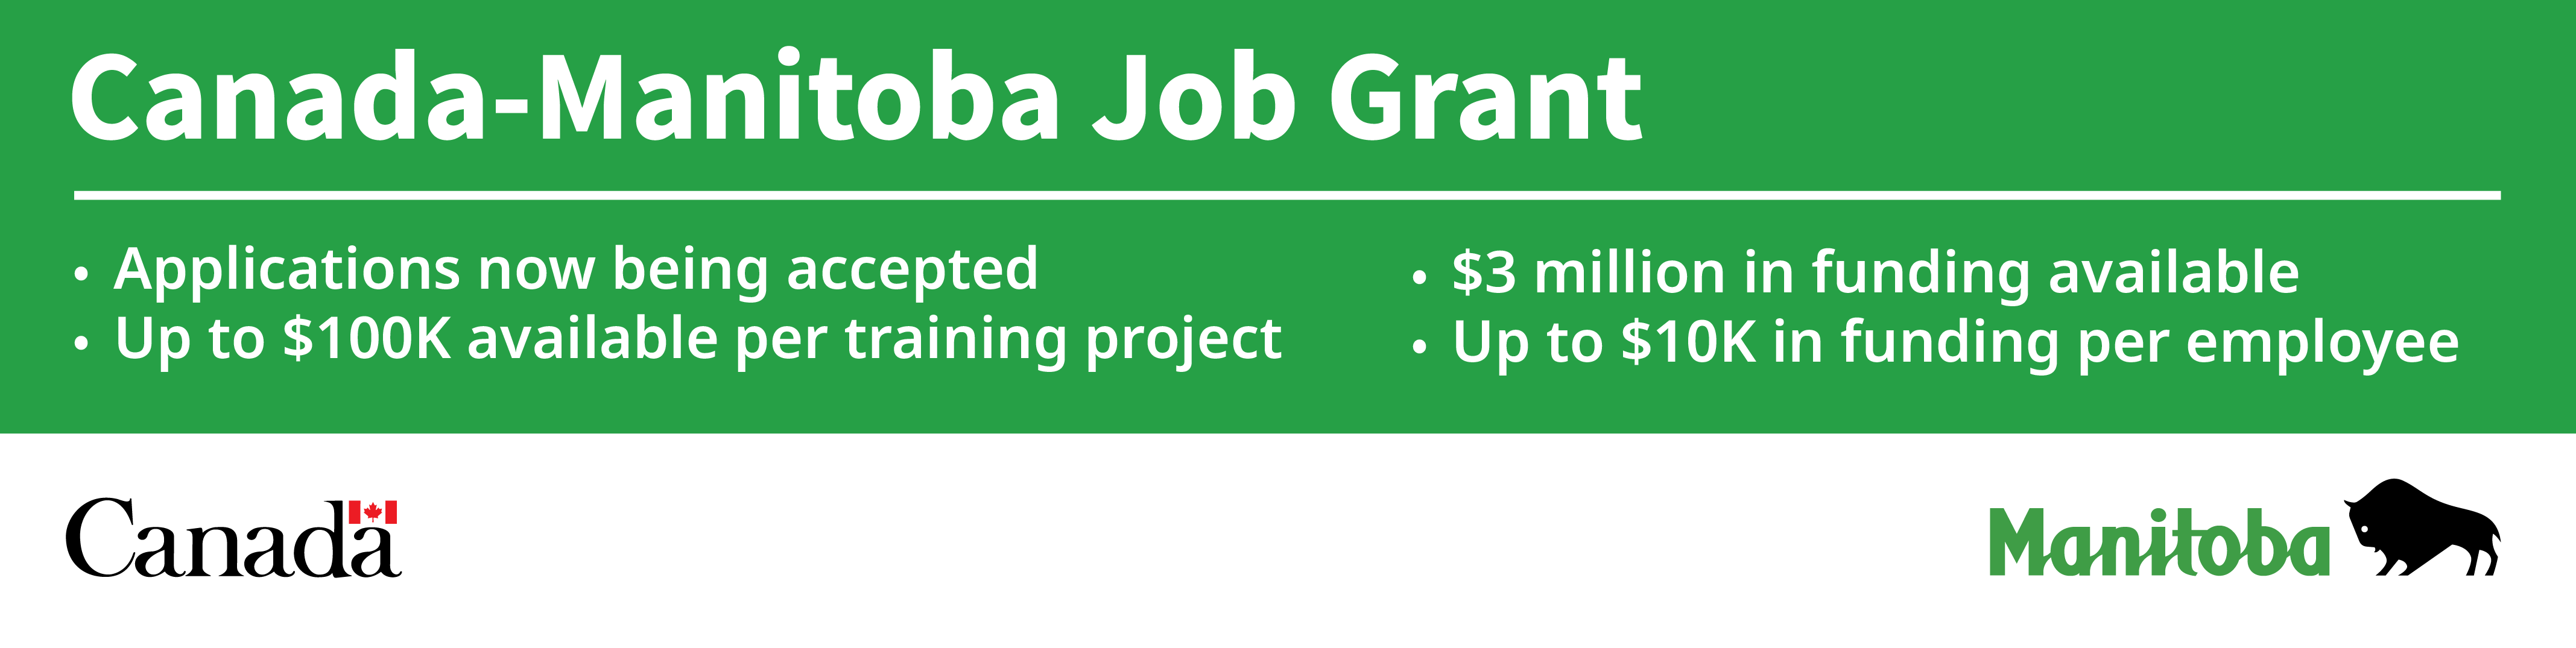 Canada-Manitoba Job Grant